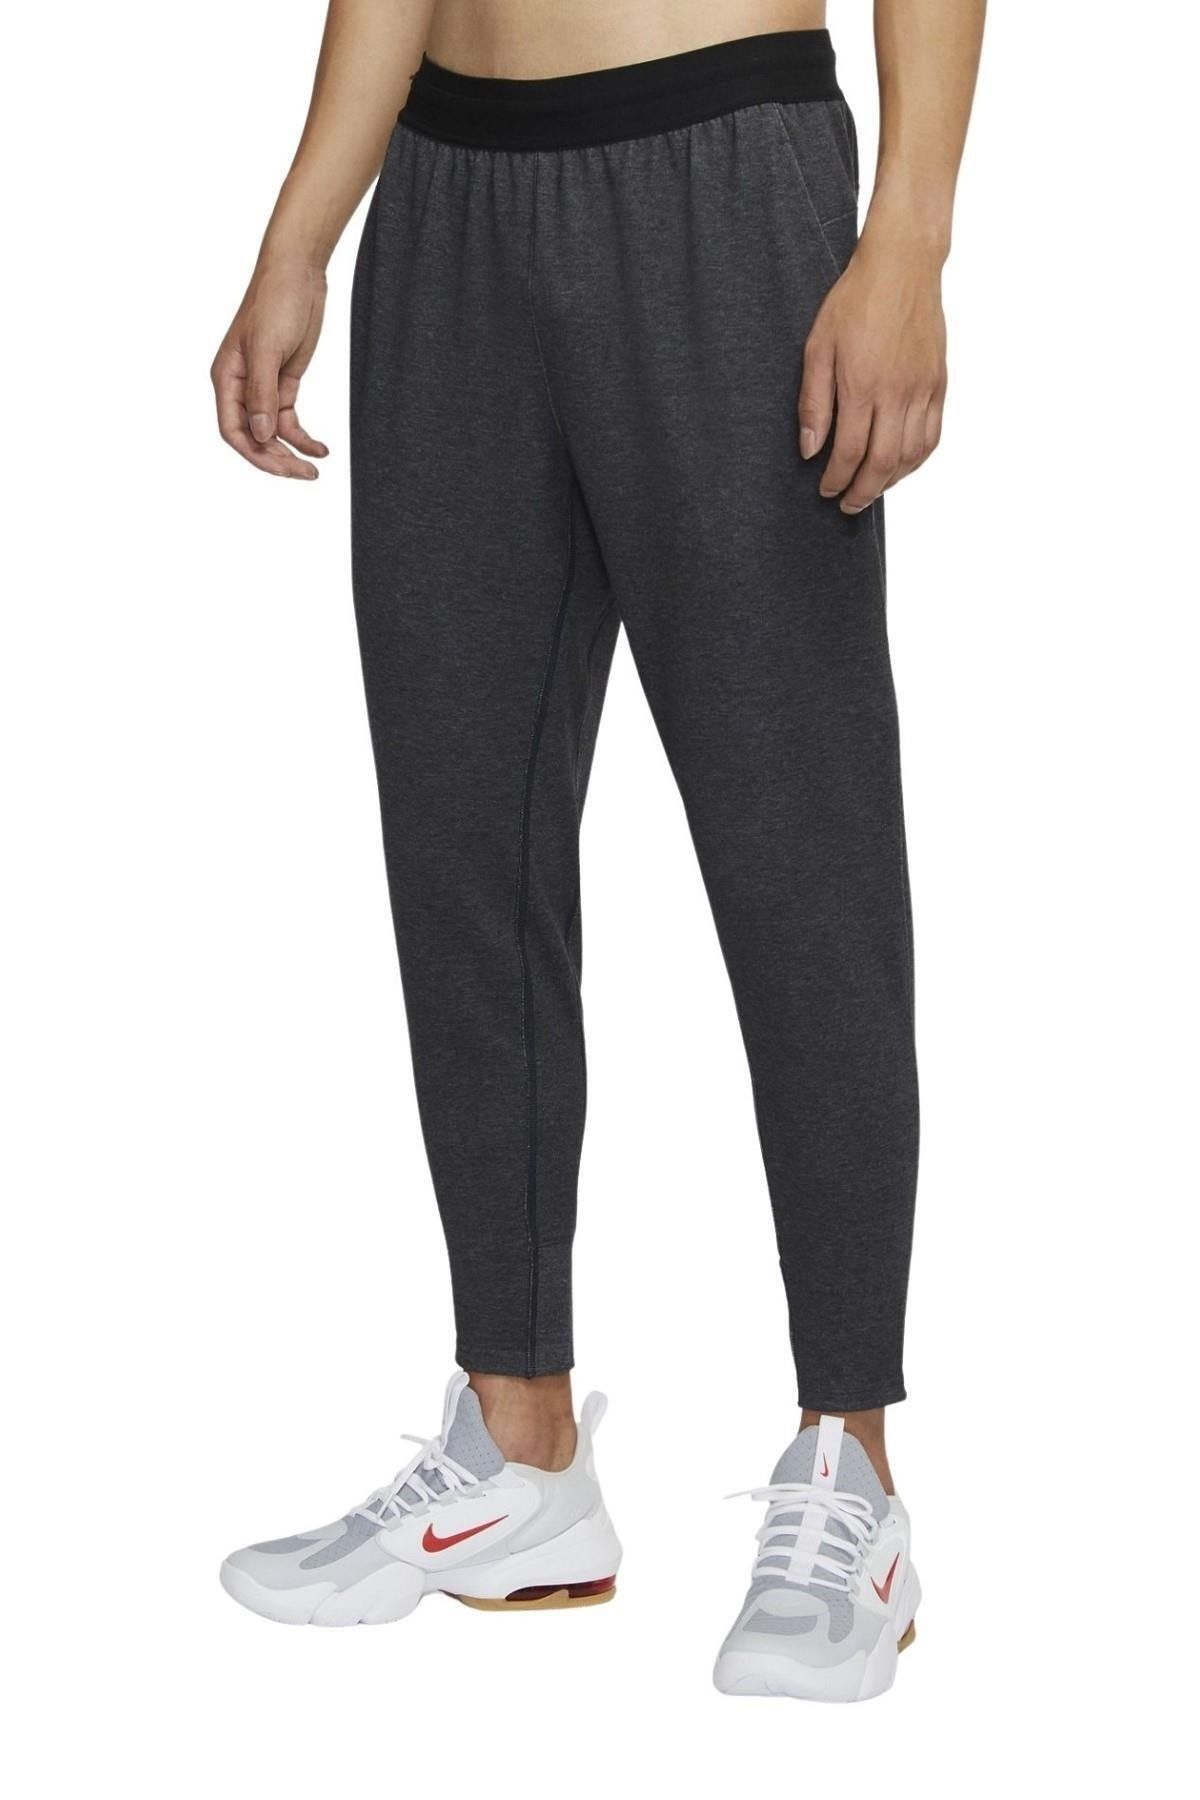 Nike Sportswear Yoga Pants Stretchy Black Sweatpants - Trendyol